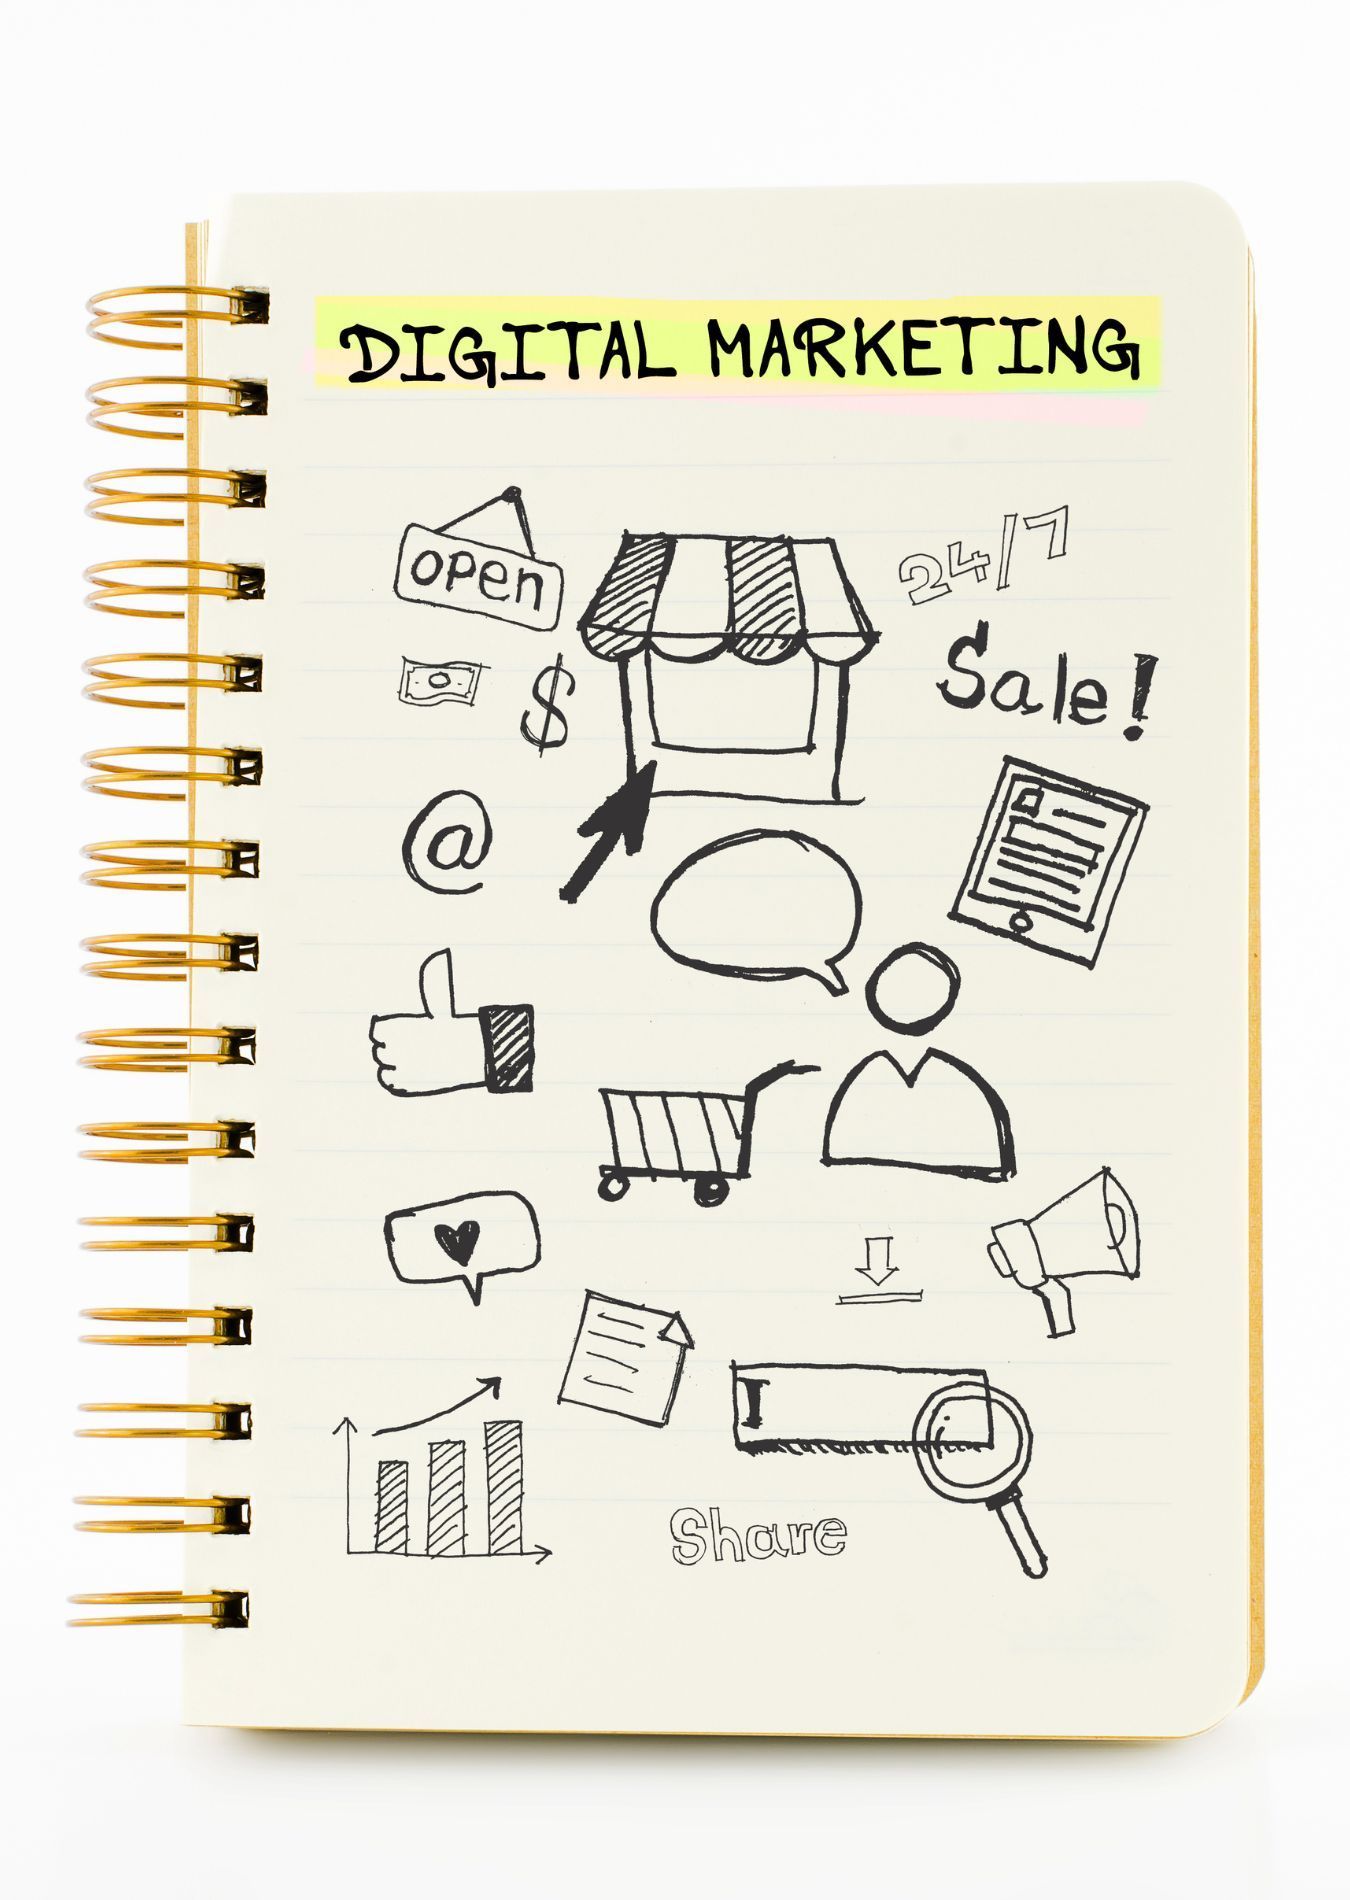 Arizona digital marketing company plan